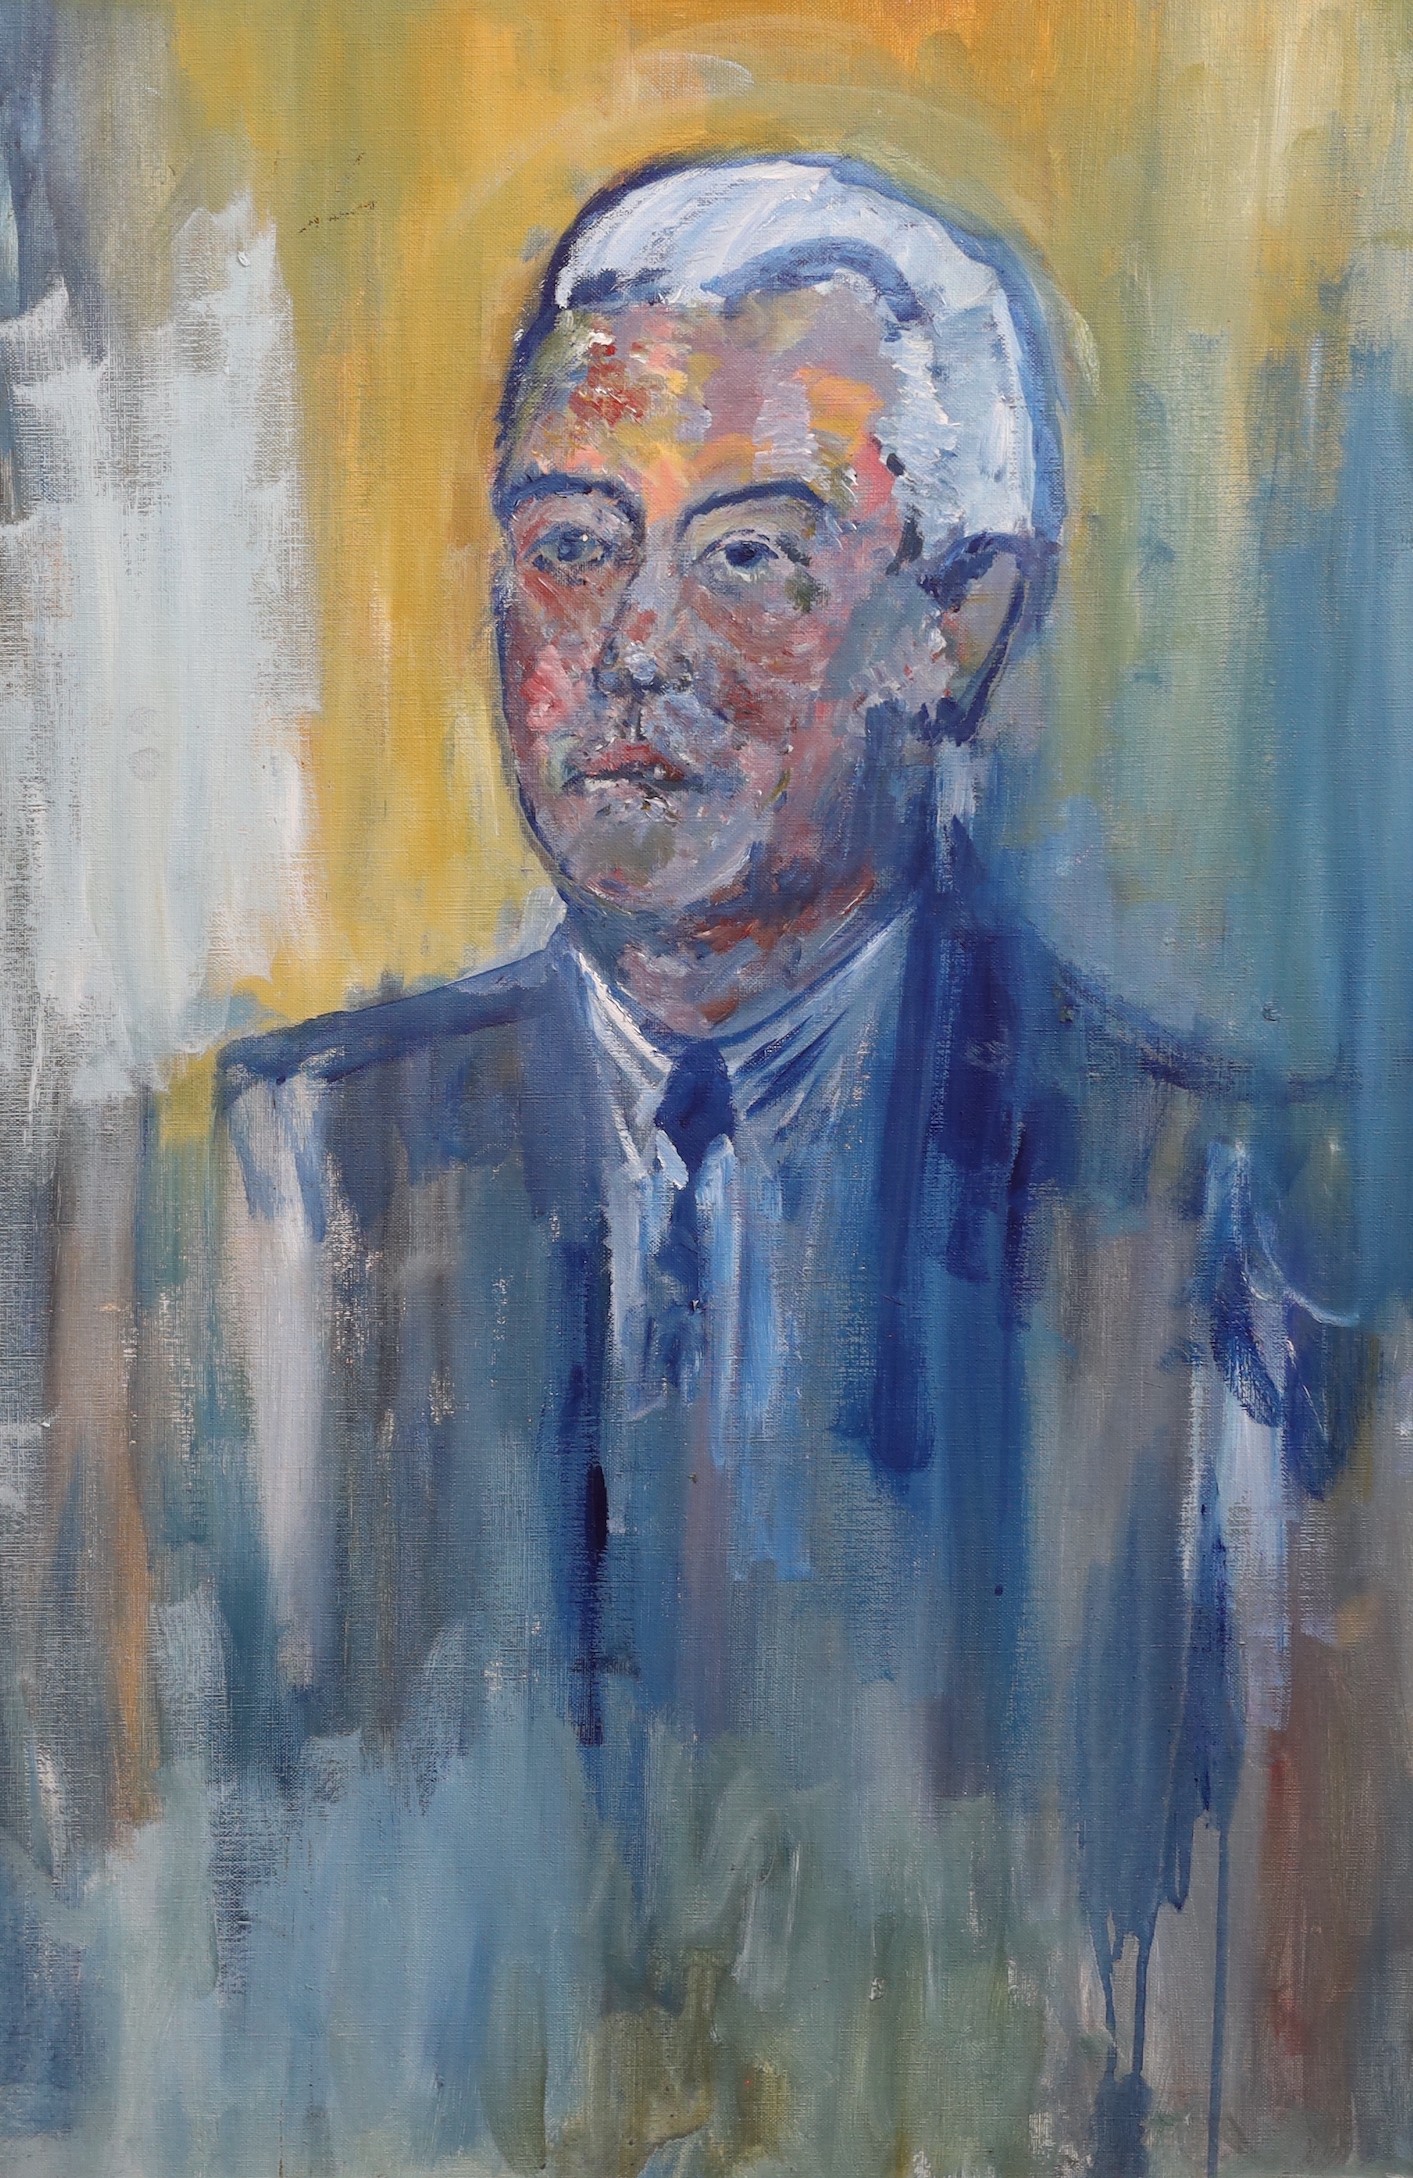 James Lawrence Isherwood (British, 1917- 1989), Portrait of a gentleman, oil on canvas